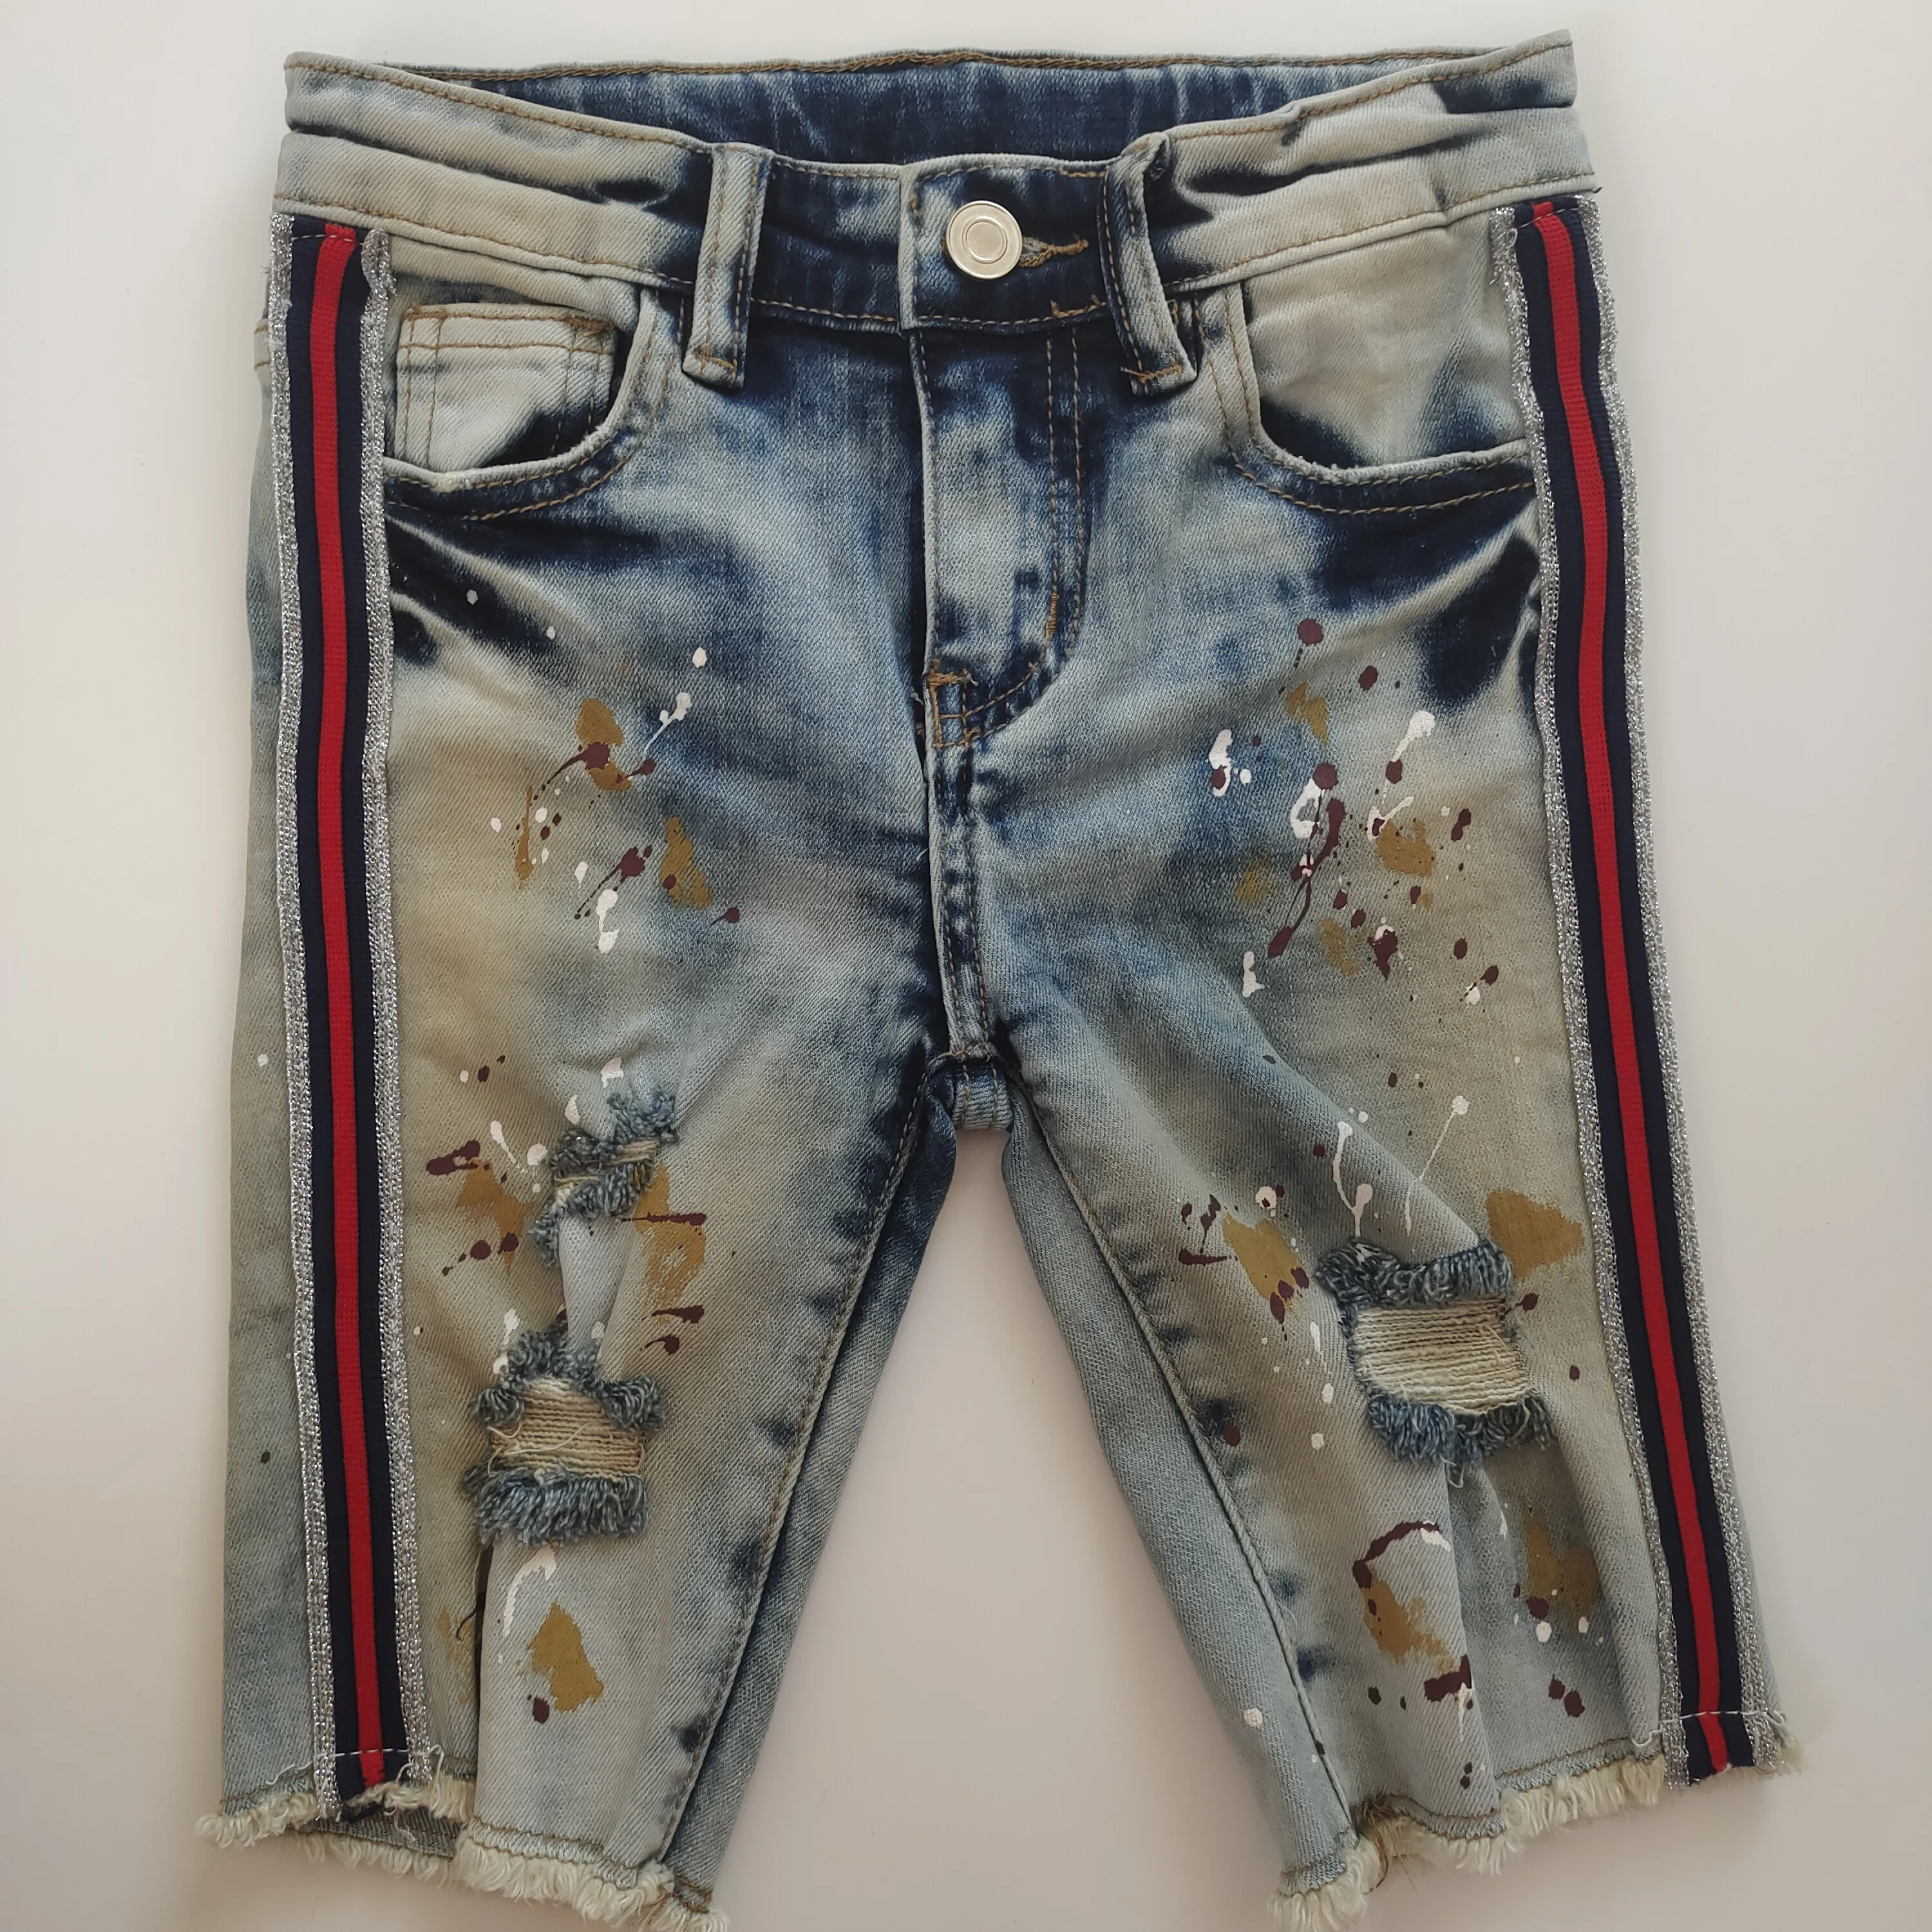 

Aipa 2021 New Fashion Wholesale Price Knee Holes Distressed Design Kids Clothing Ripped Denim Jean Shorts Boys, Camo&black , red camo & black